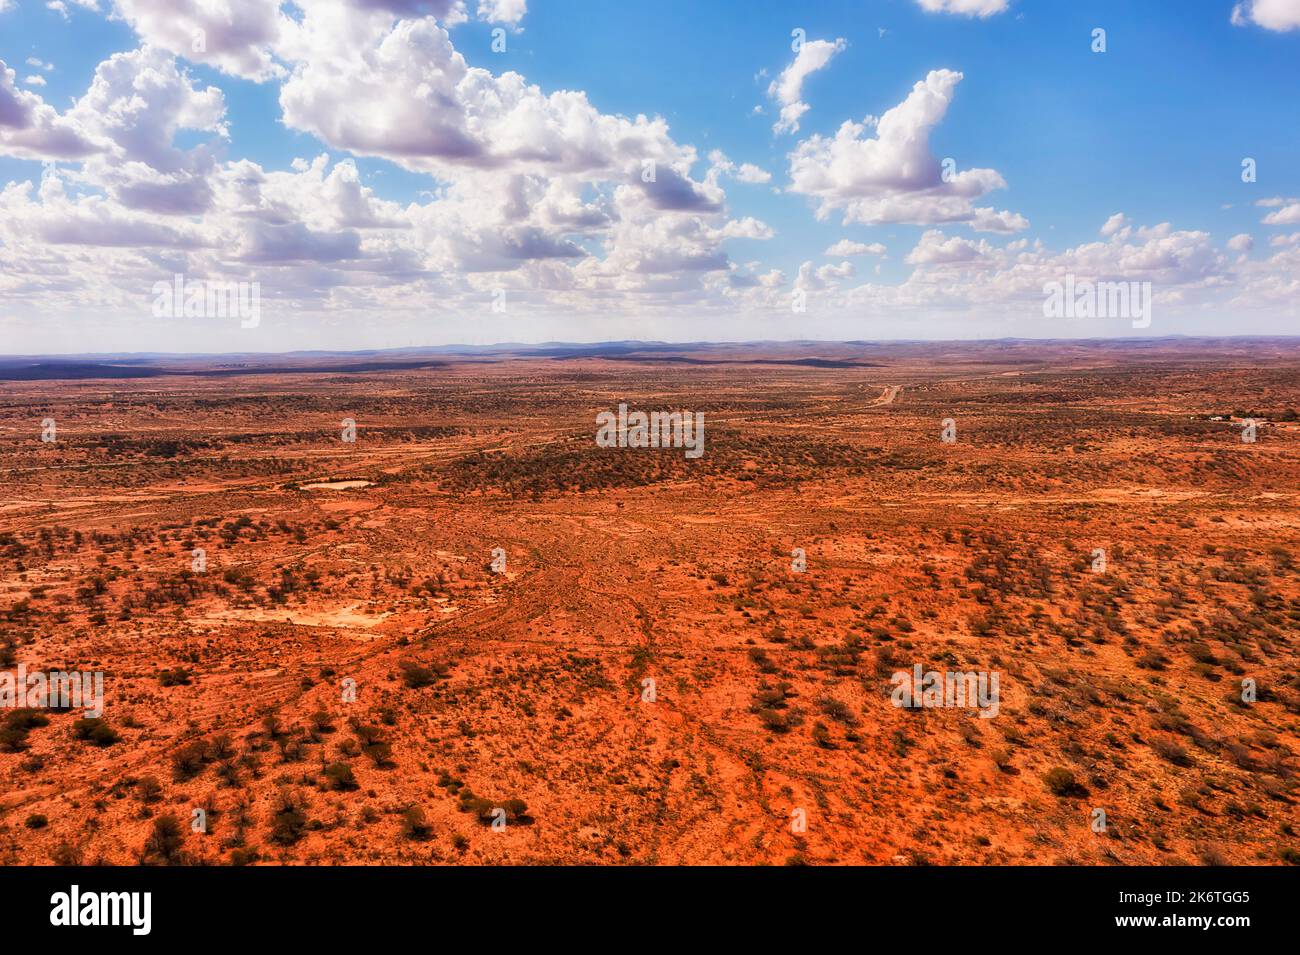 Vast arid deserted red soil outback at Broken hill to Silverton in Australia - aerial landscape. Stock Photo